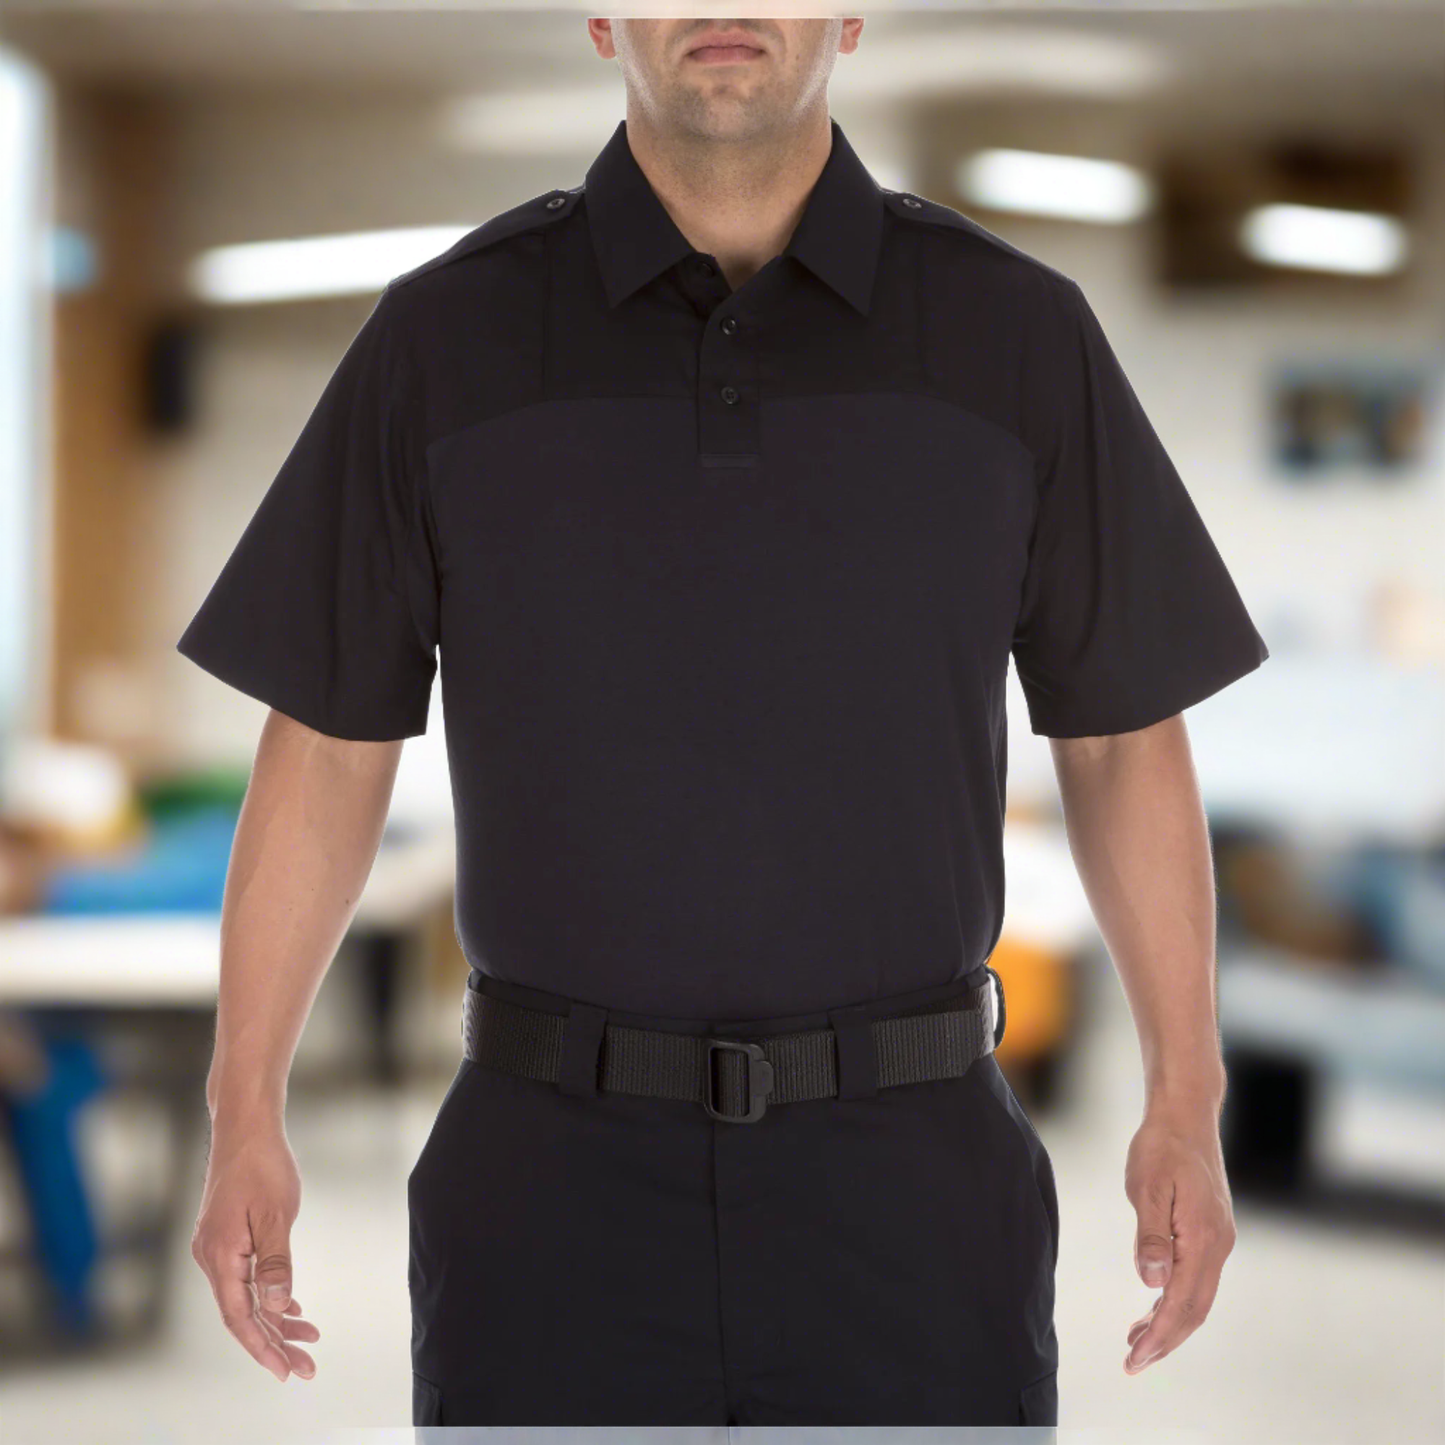 Tops - 5.11 Tactical Taclite PDU Rapid Shirt - Short Sleeve